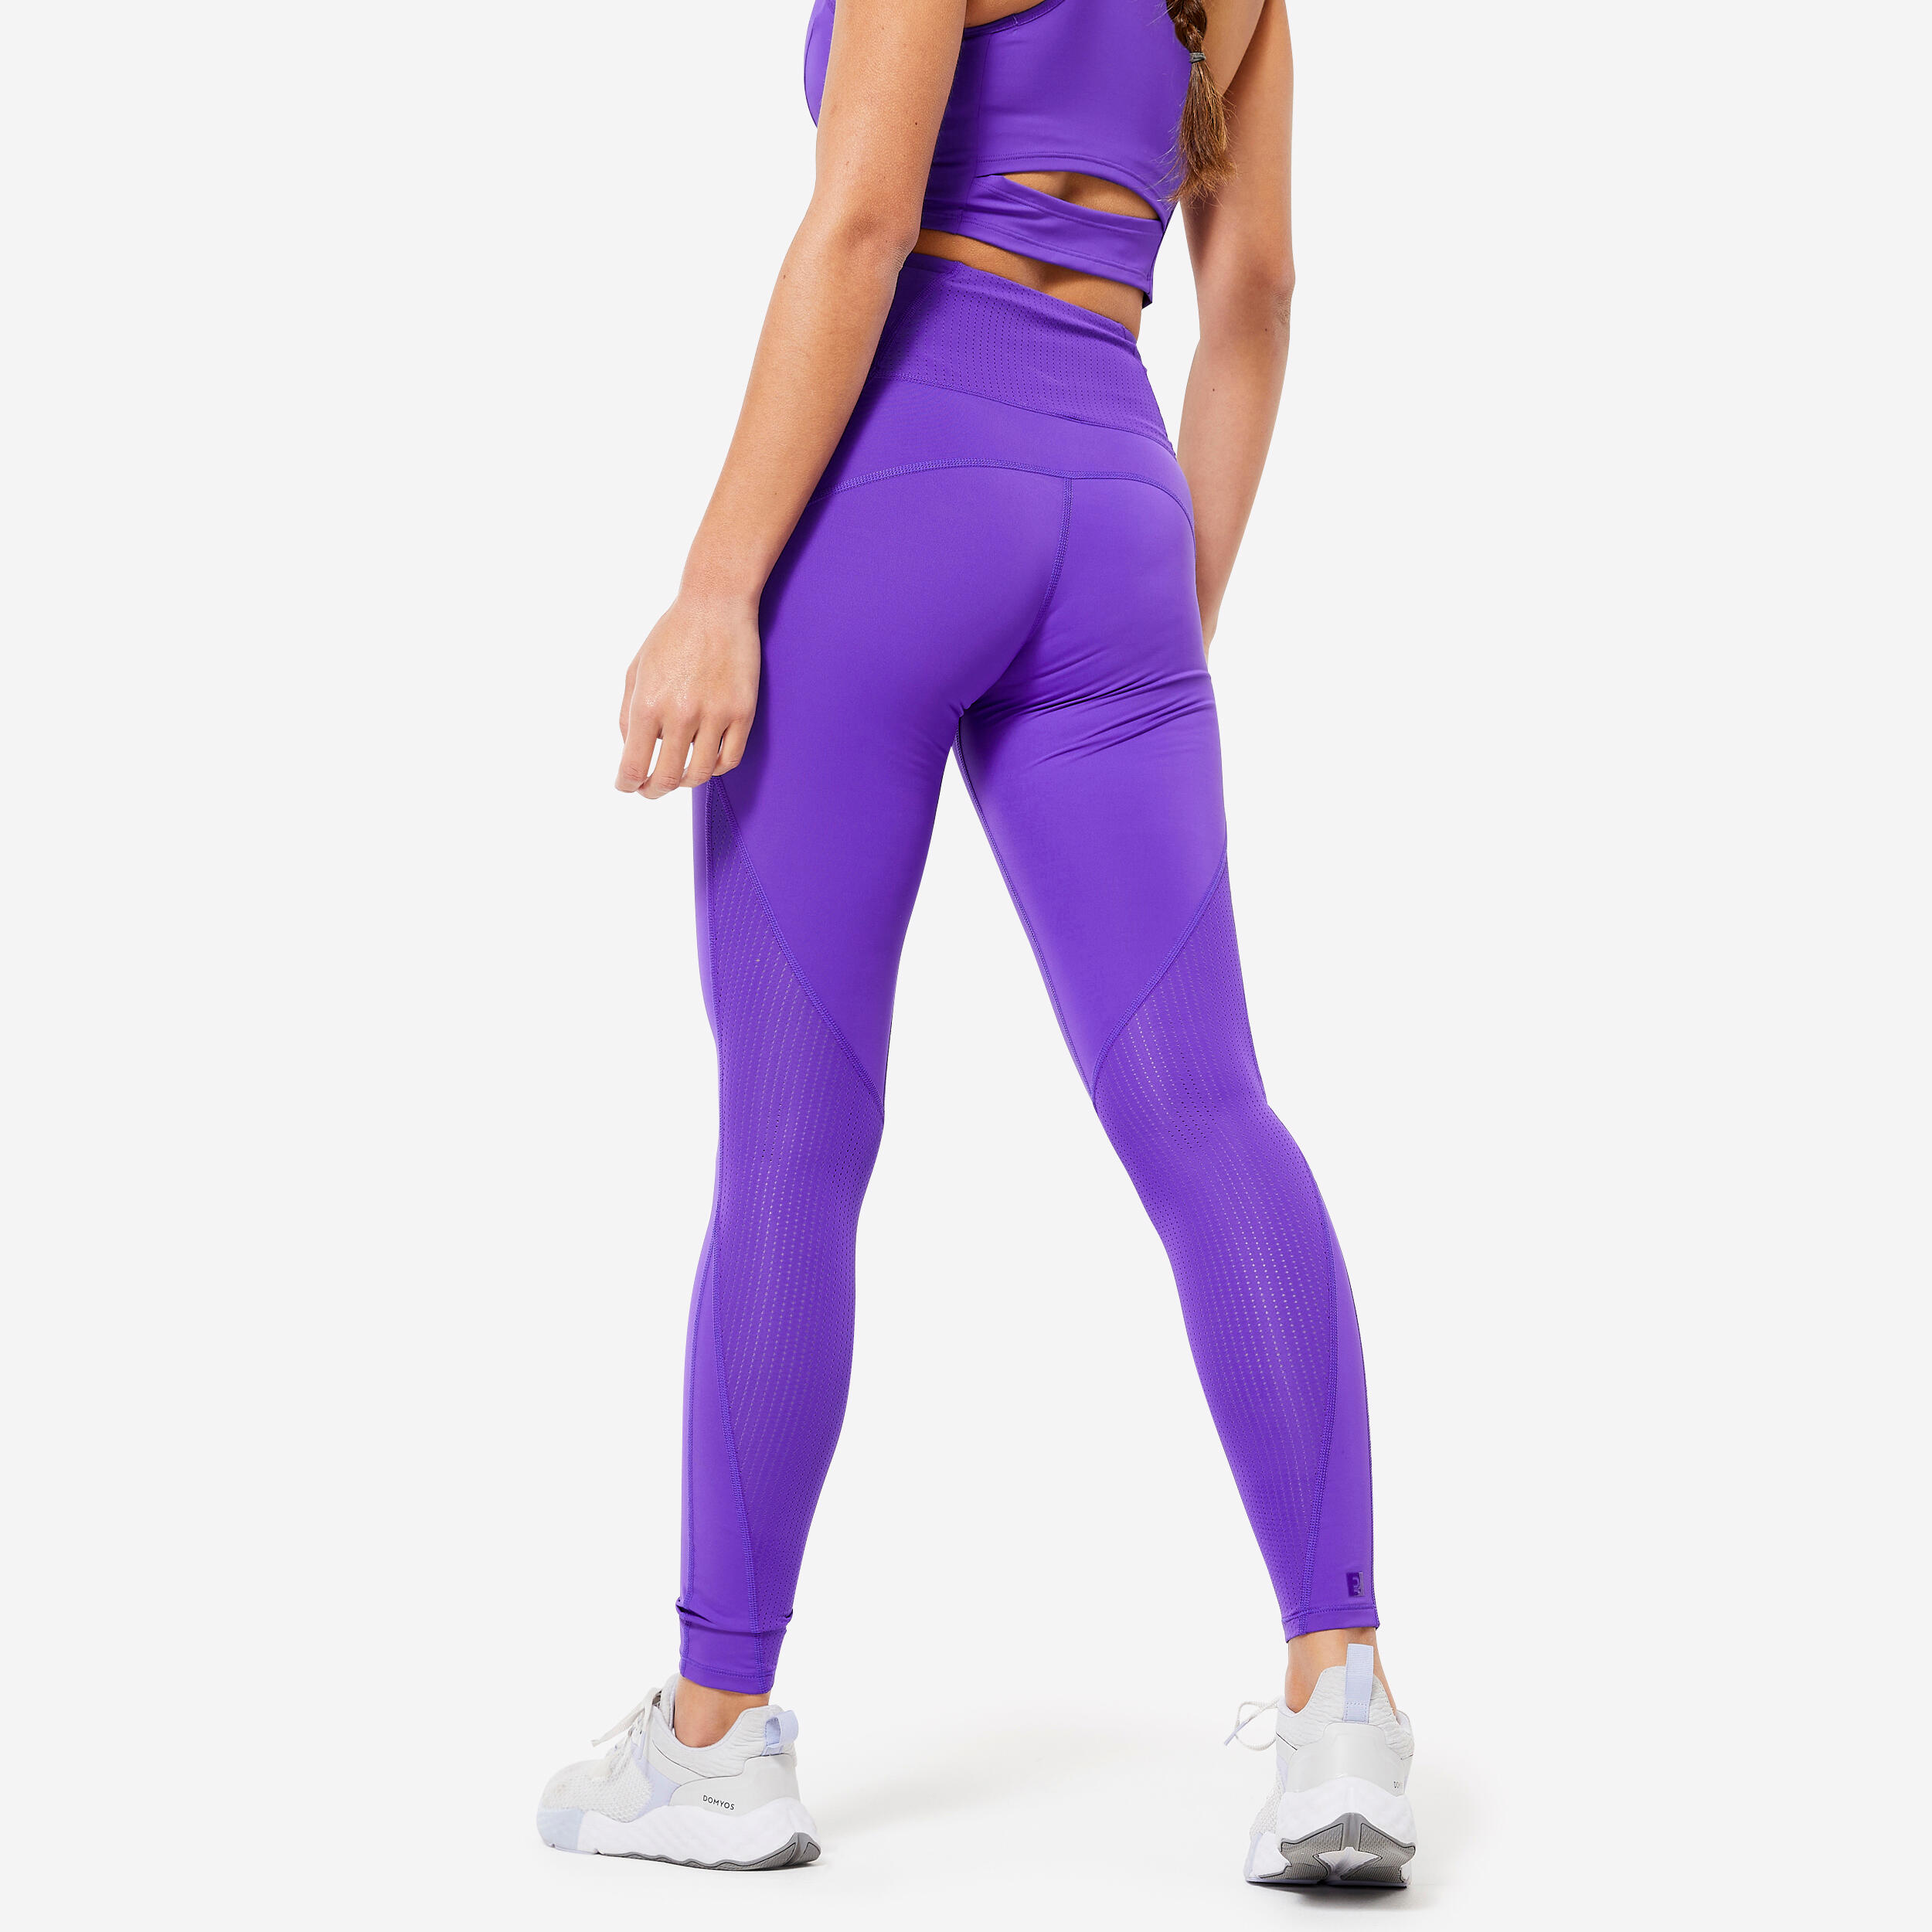 Women's High-Waisted Cardio Fitness Leggings - Purple 5/6